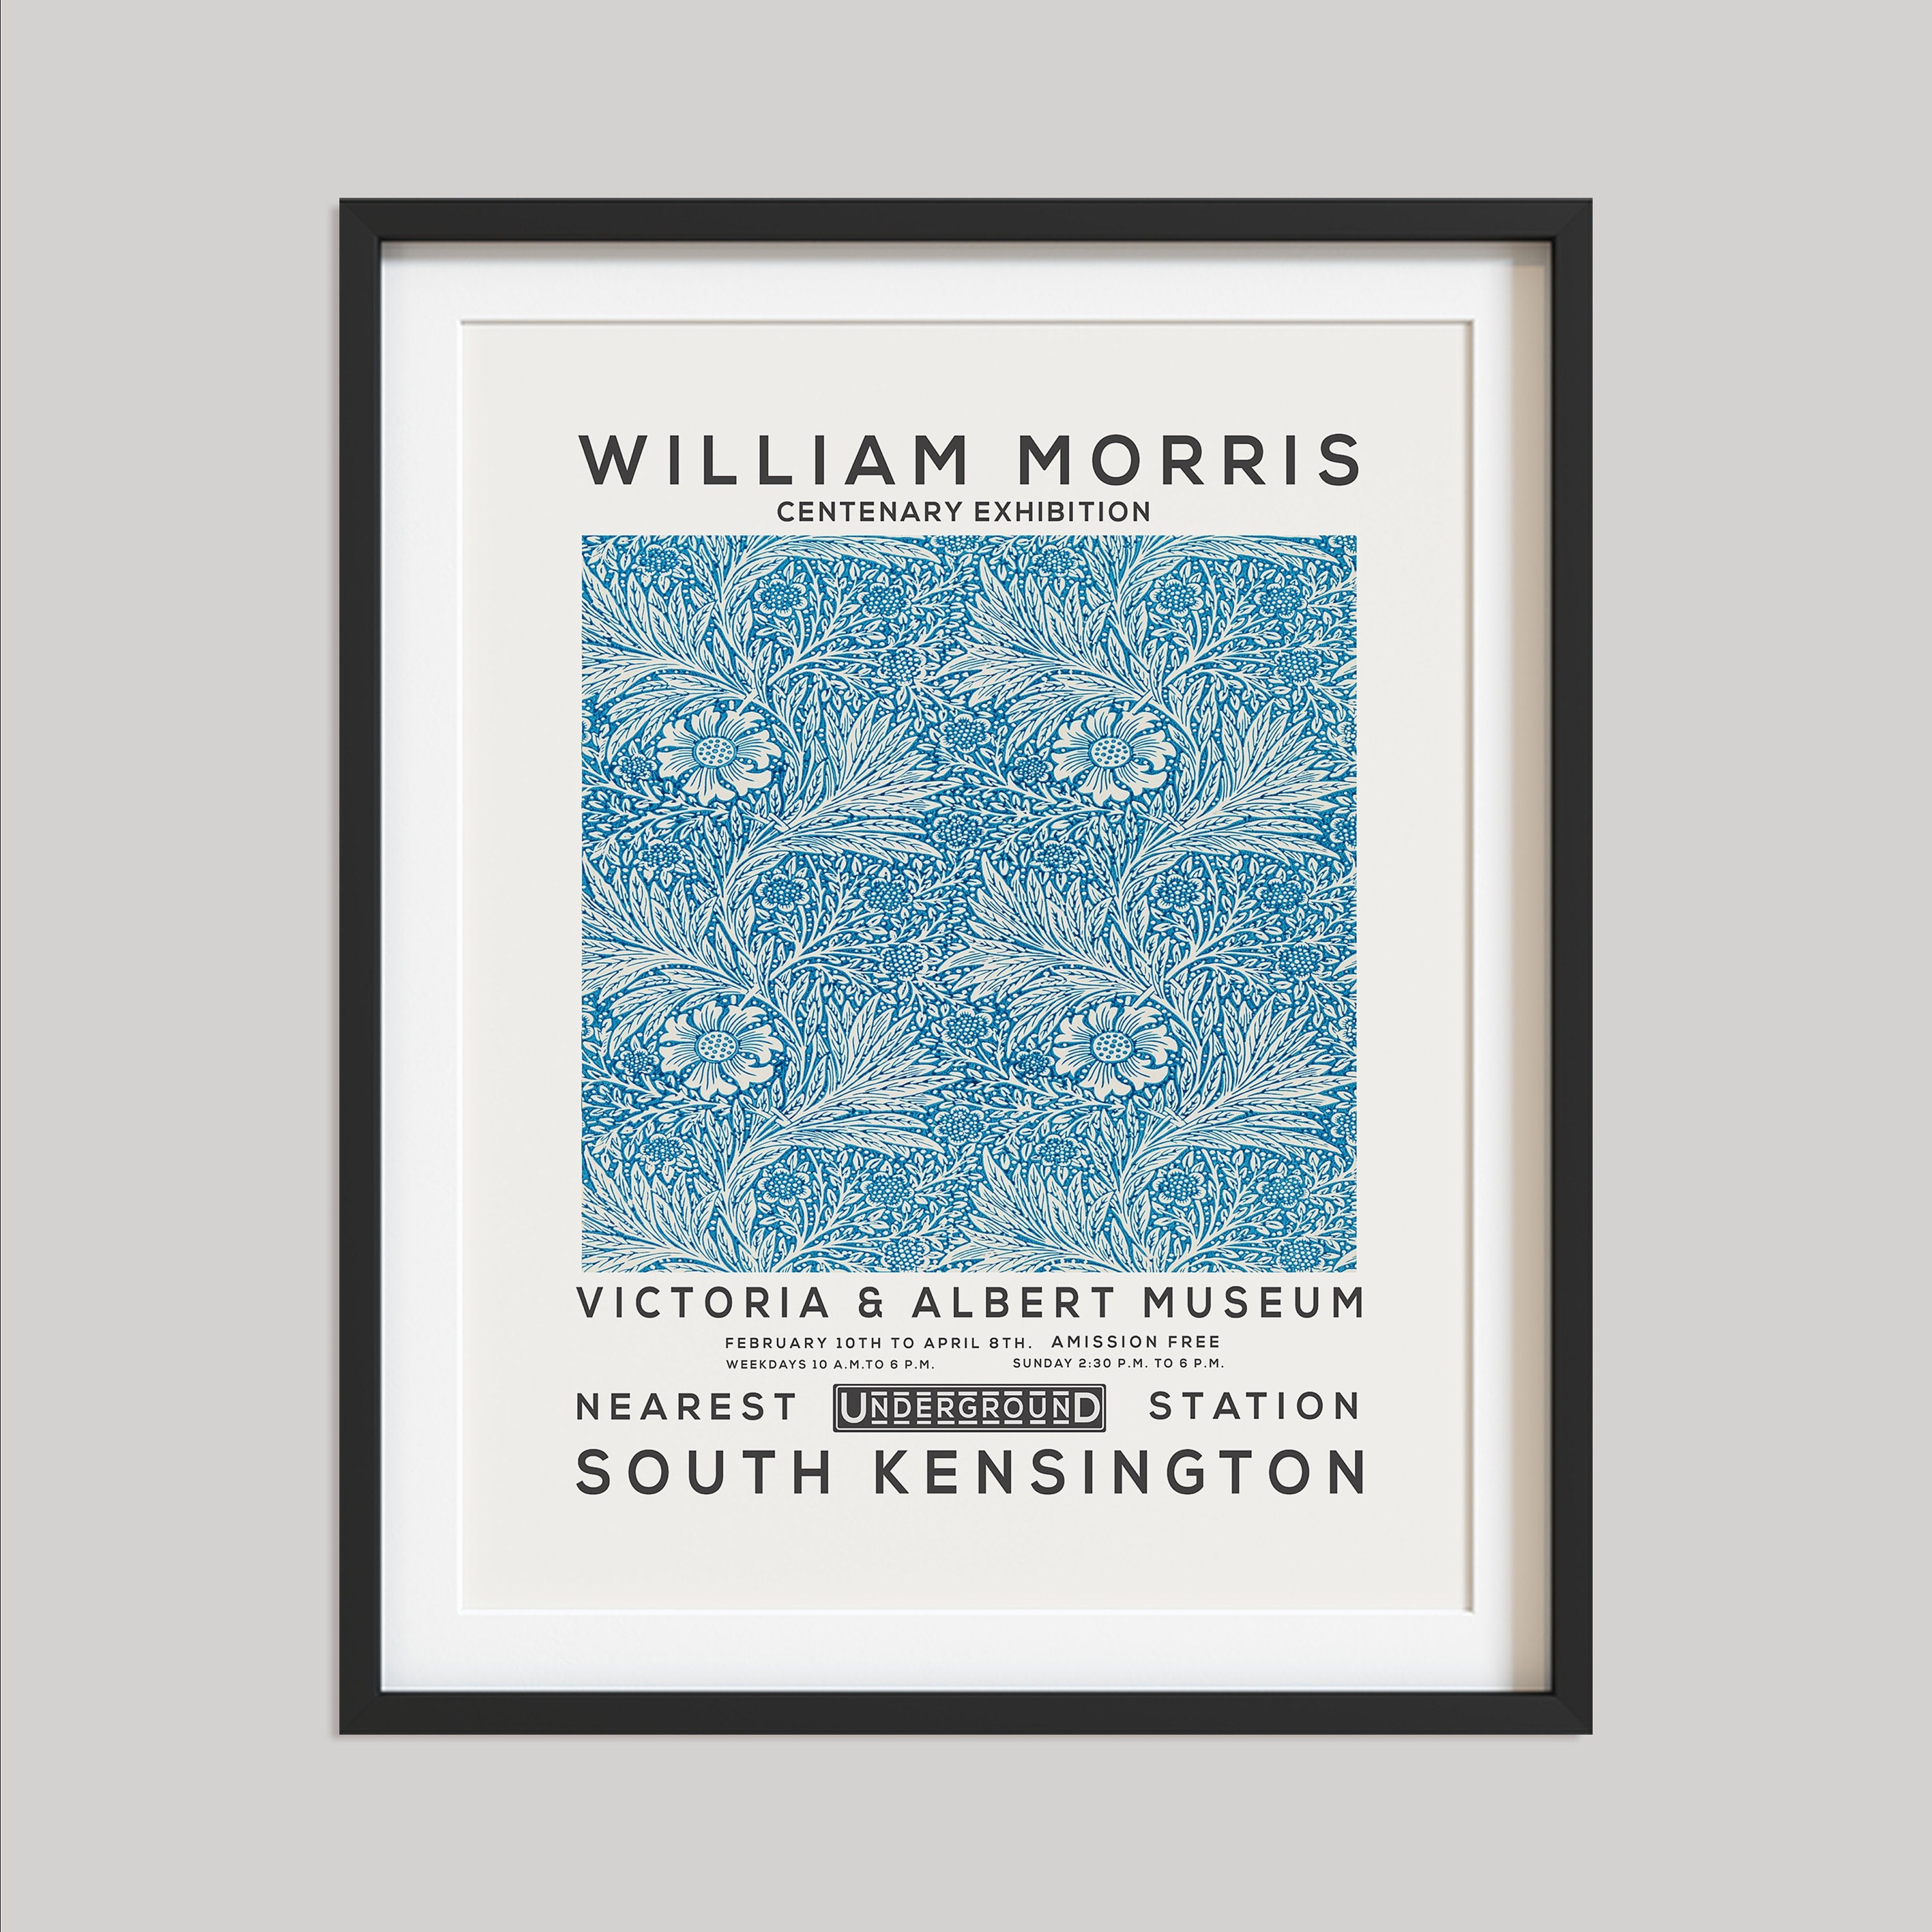 William Morris Print, Vintage Wall Decor, Exhibition Poster, Floral Wall Art, Flower Print, Home Decor, Blue Floral